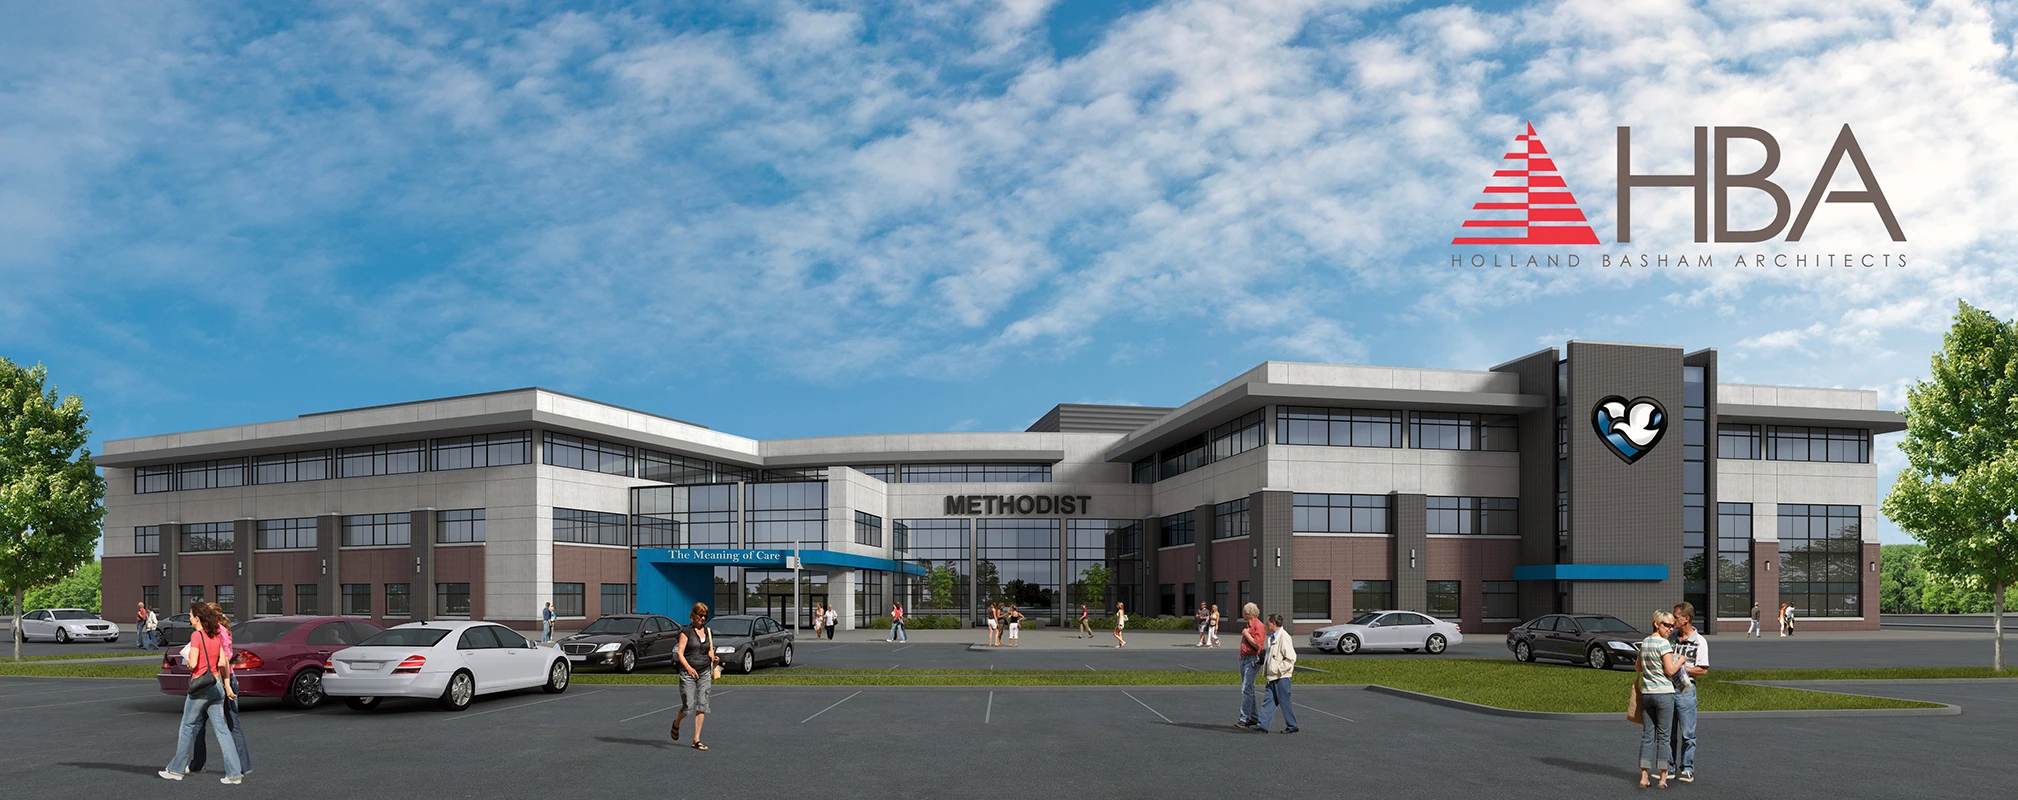 Rendering of the new Methodist Health System headquarters in Omaha, NE.